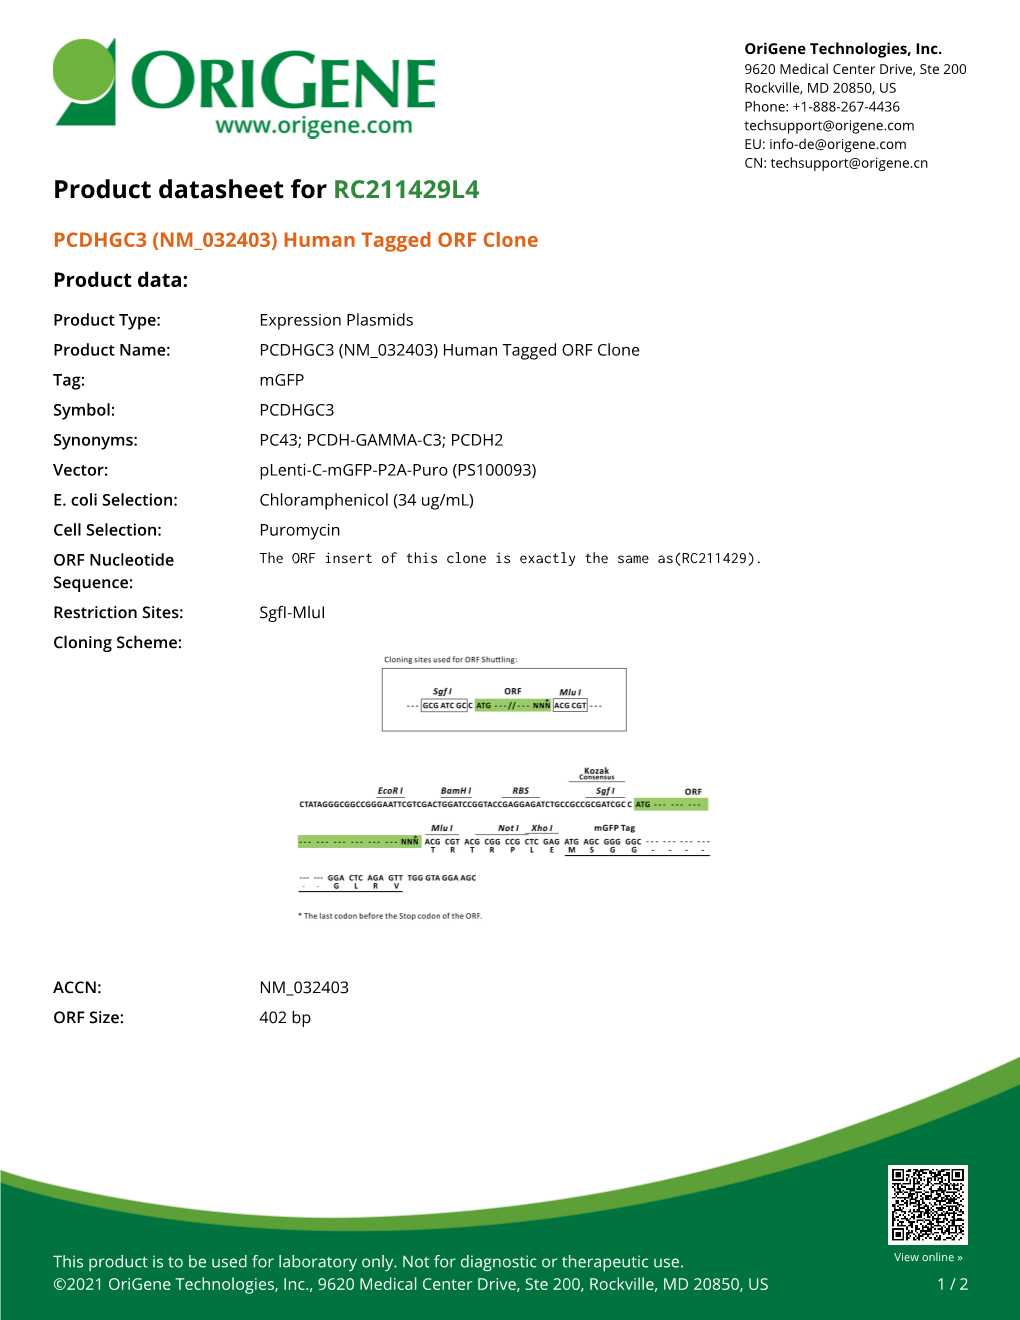 PCDHGC3 (NM 032403) Human Tagged ORF Clone Product Data